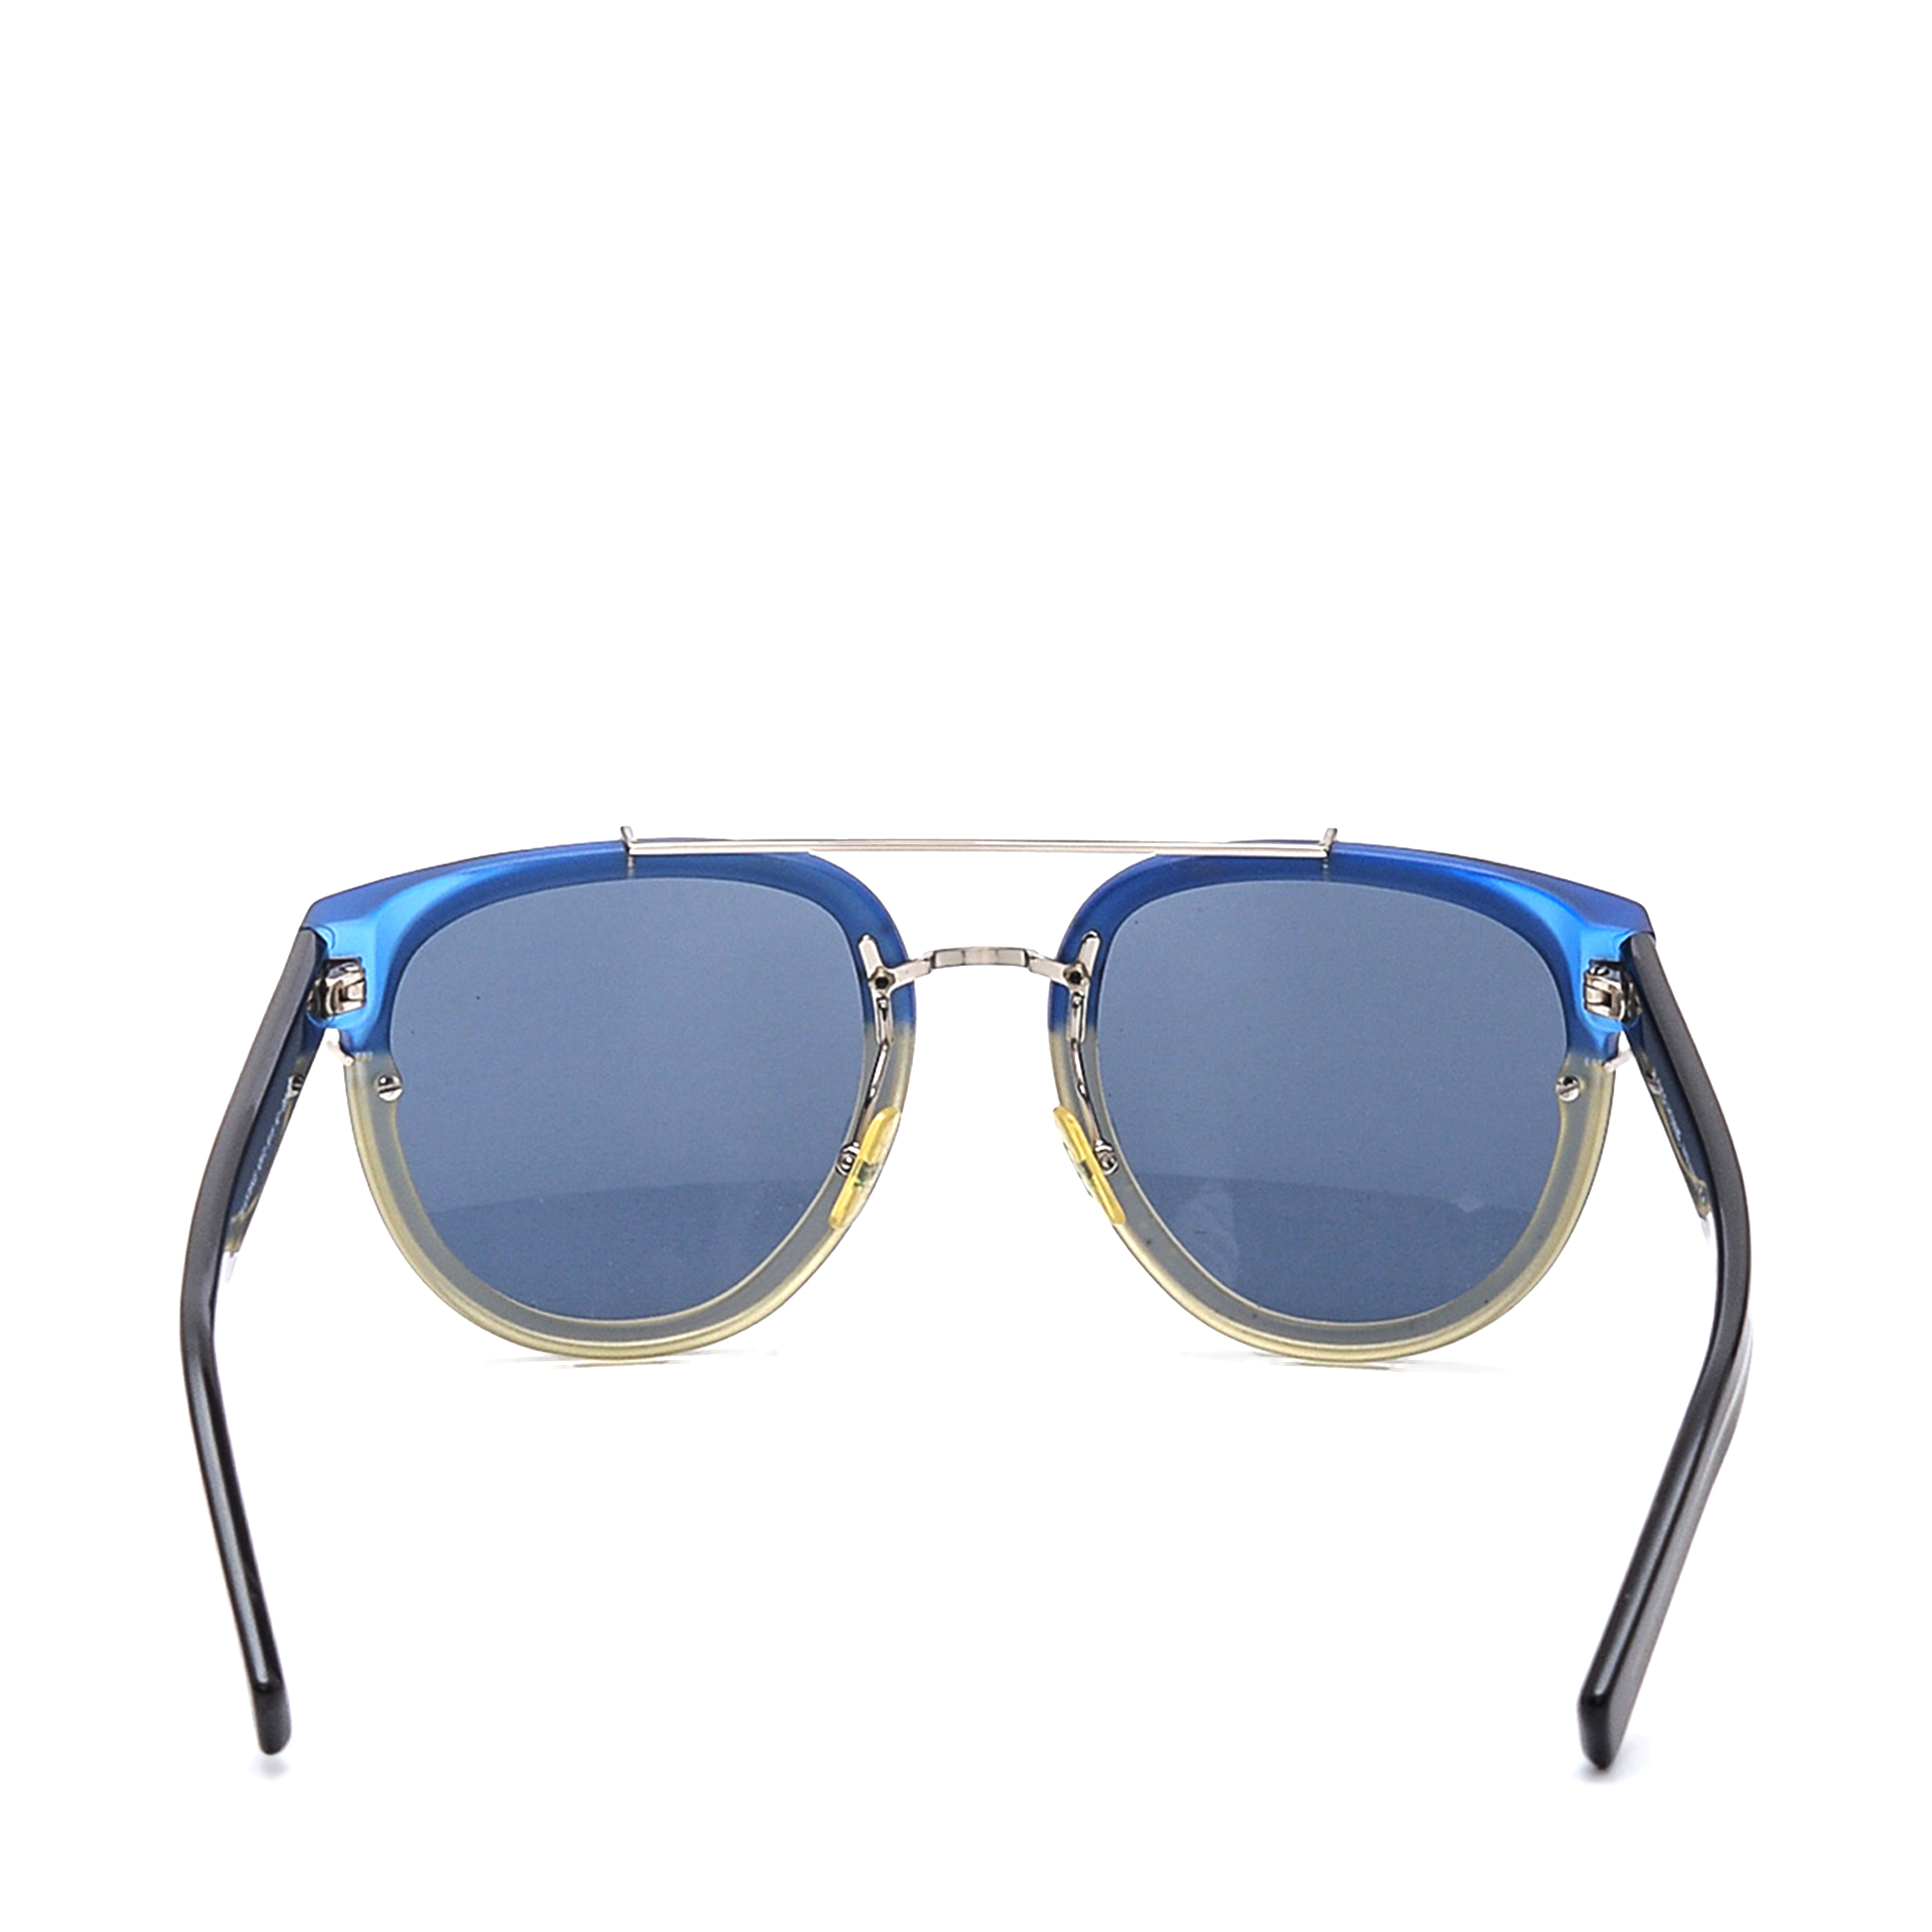 Christian Dior - Black & Blue Marine Sunglasses